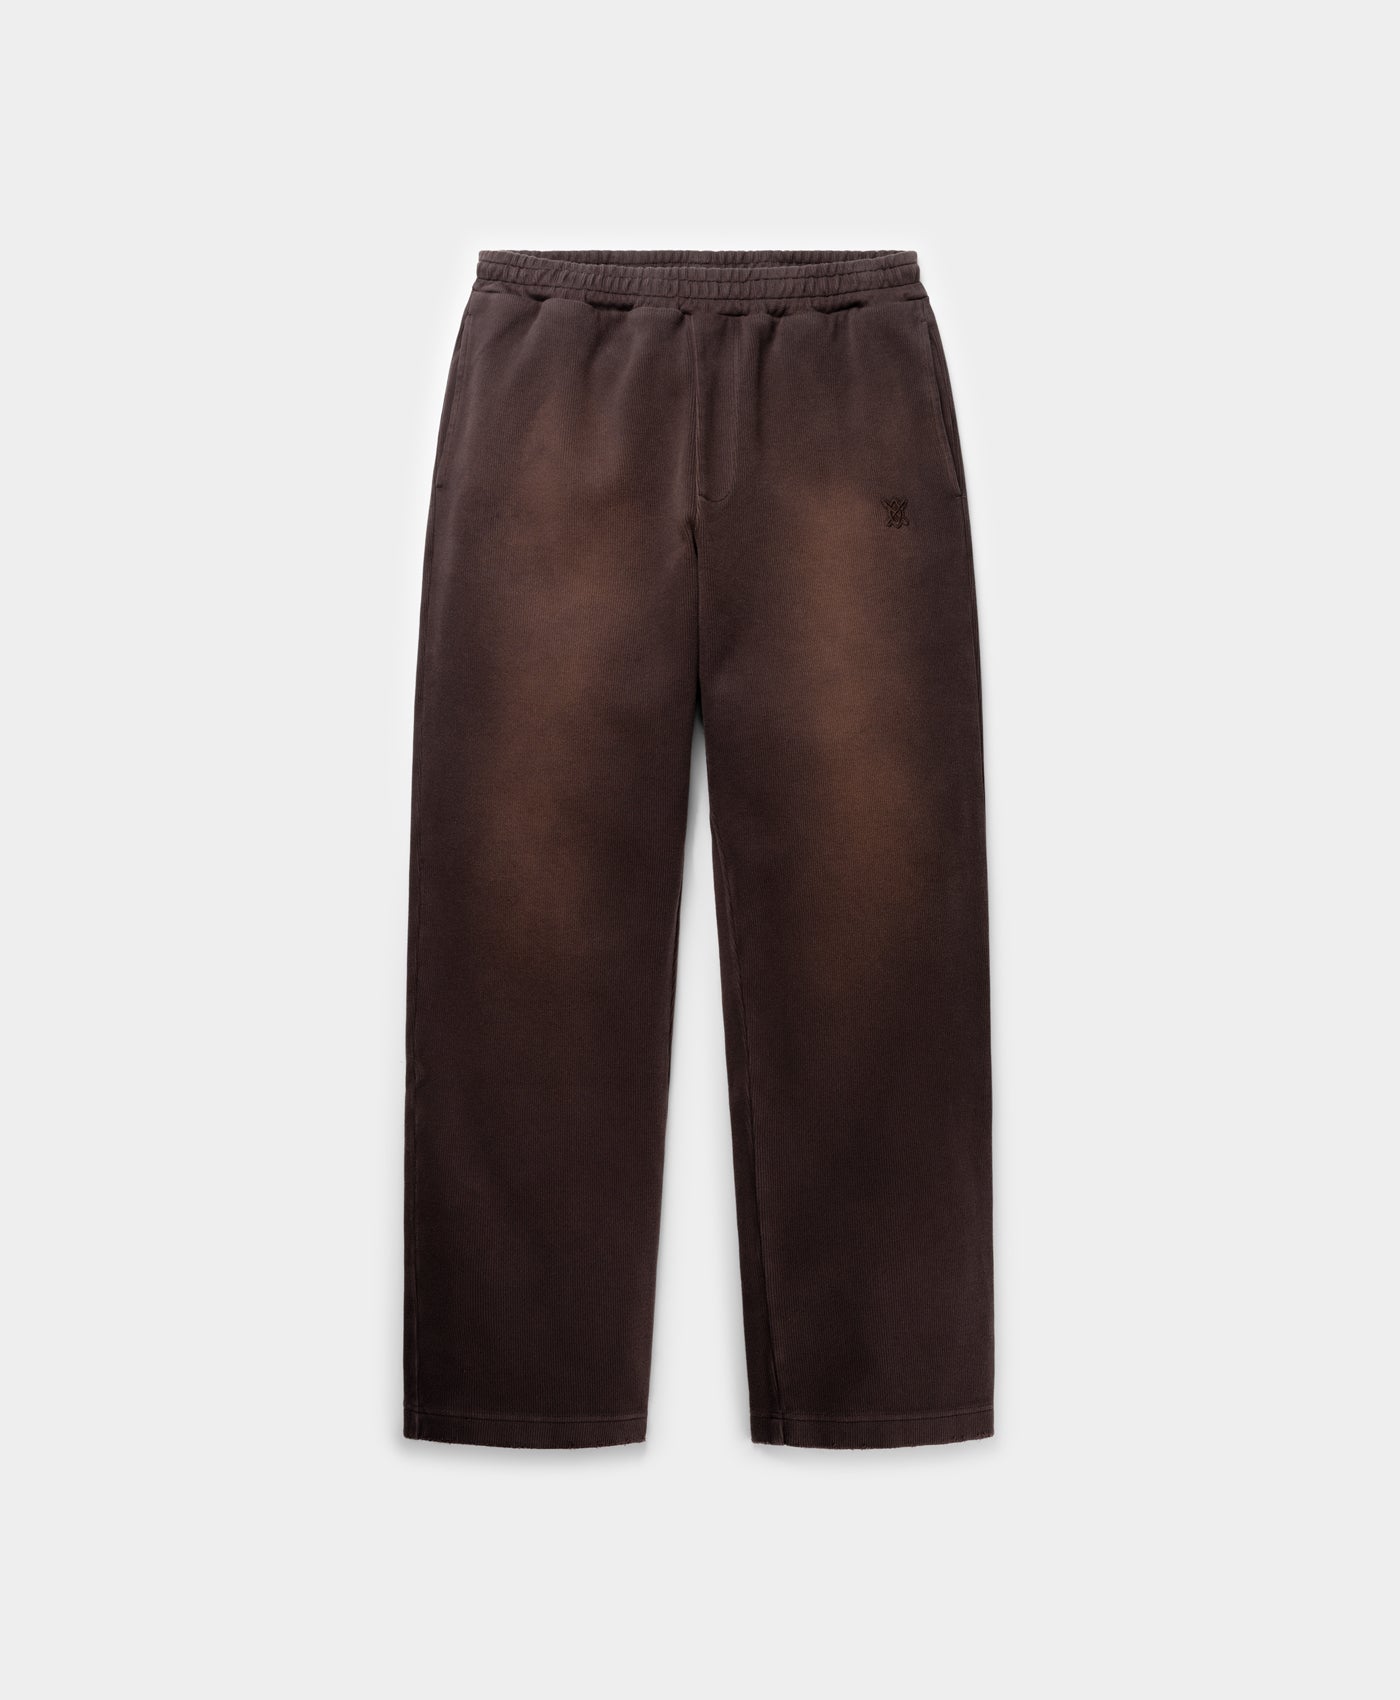 DP - Chocolate Brown Rodell Pants - Packshot - Front